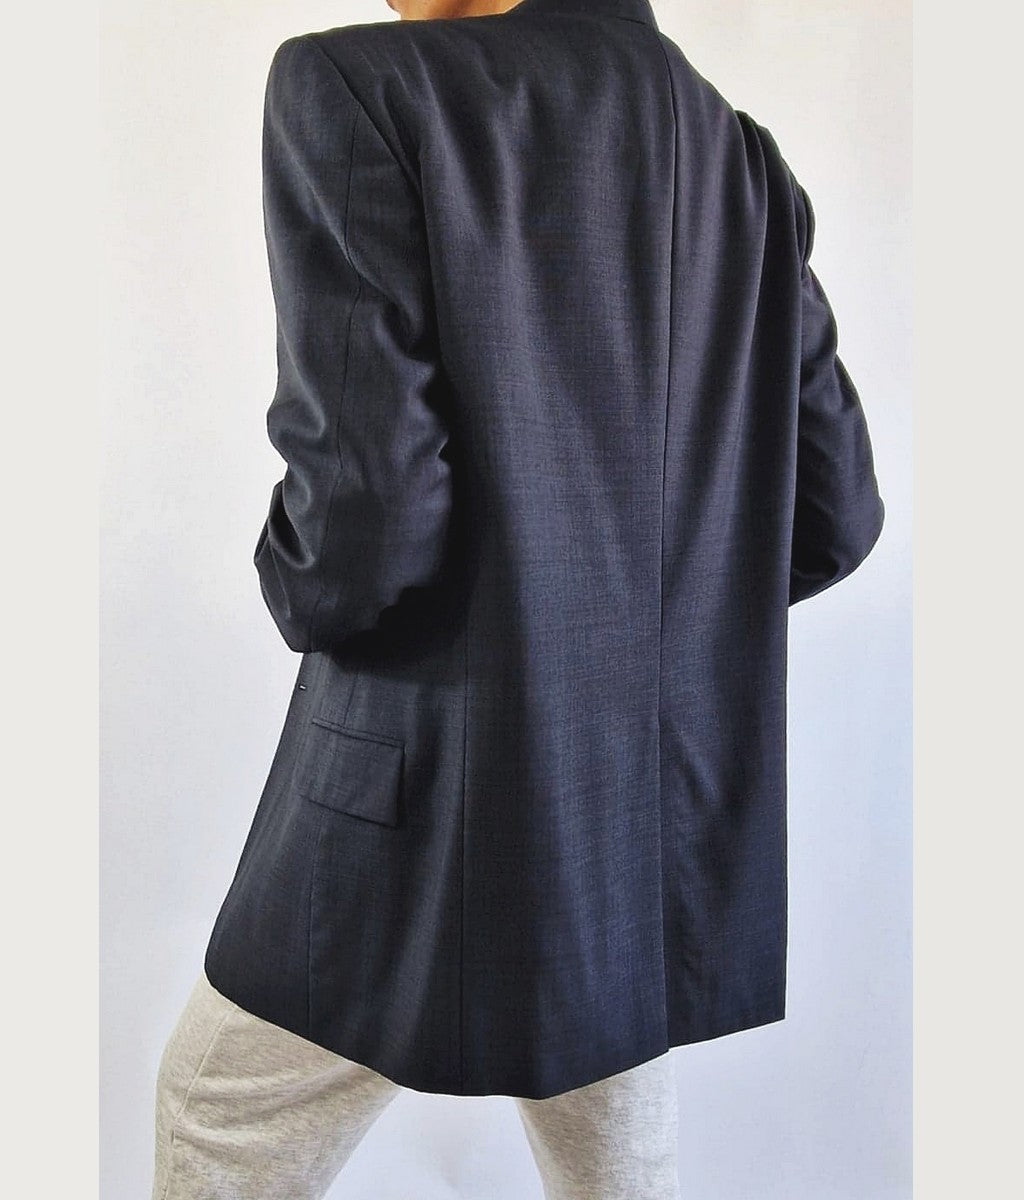 blazer bleu vintage Tommy Hilfiger pour femme taille small medium